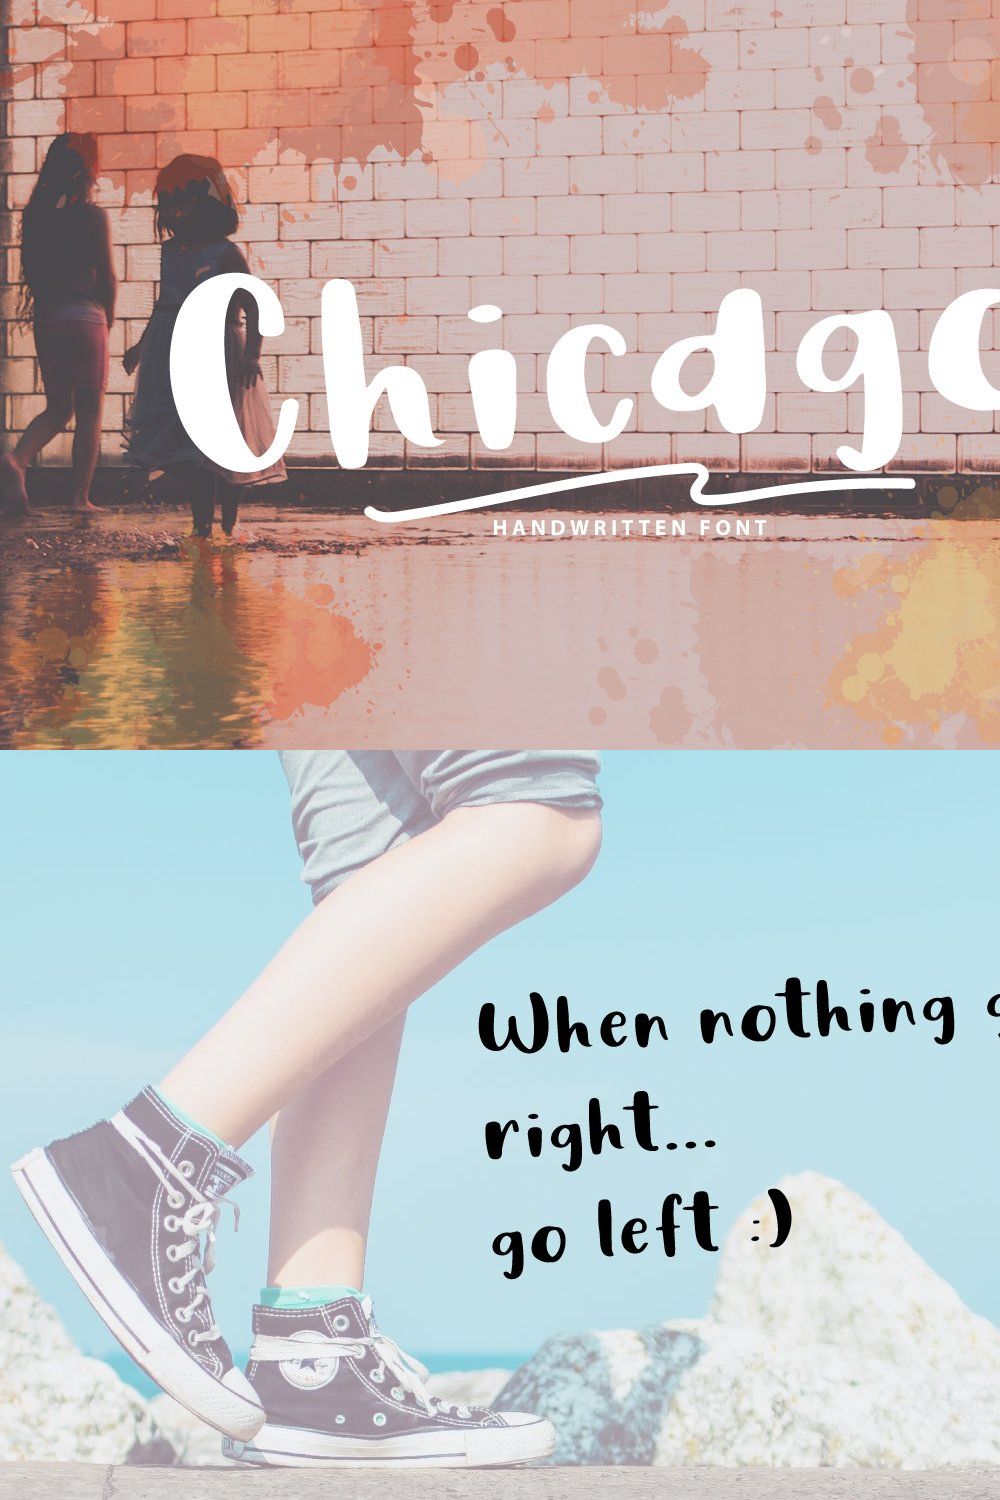 Chicago | A Chic Handwritten Font pinterest preview image.